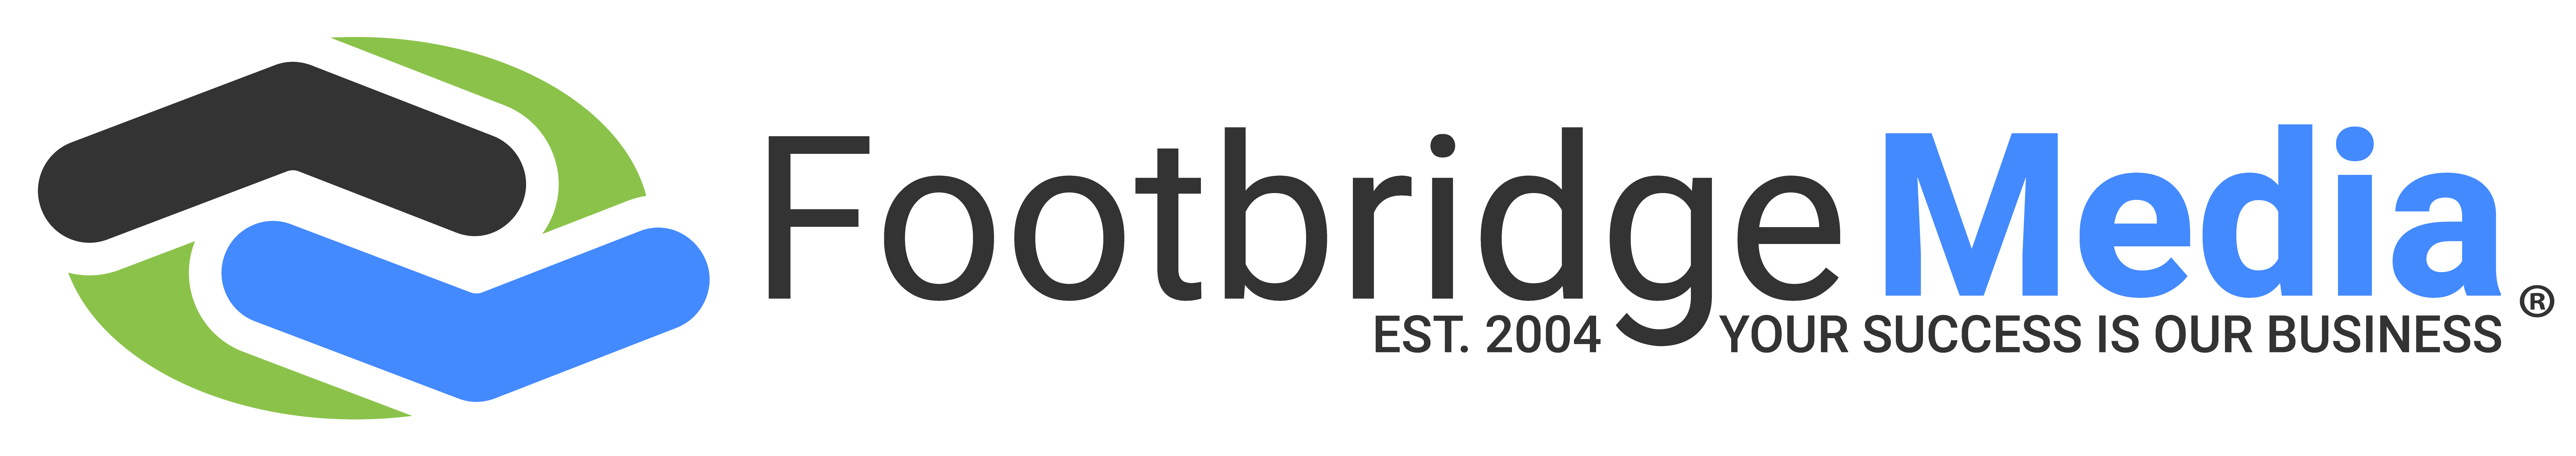 Footbridge Media Mobile Logo